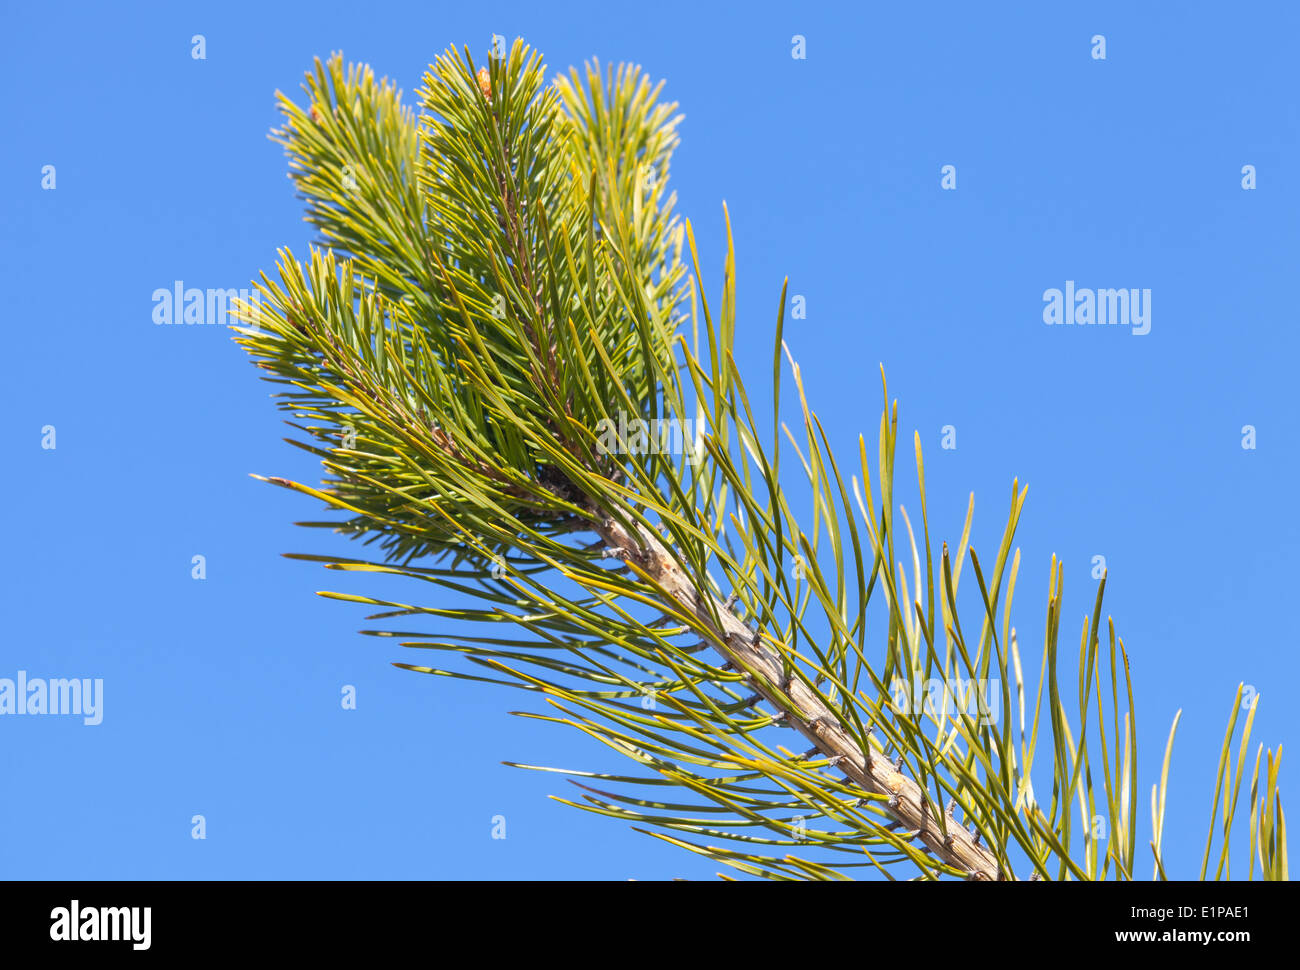 Pine tree branch with fresh green needles Stock Photo